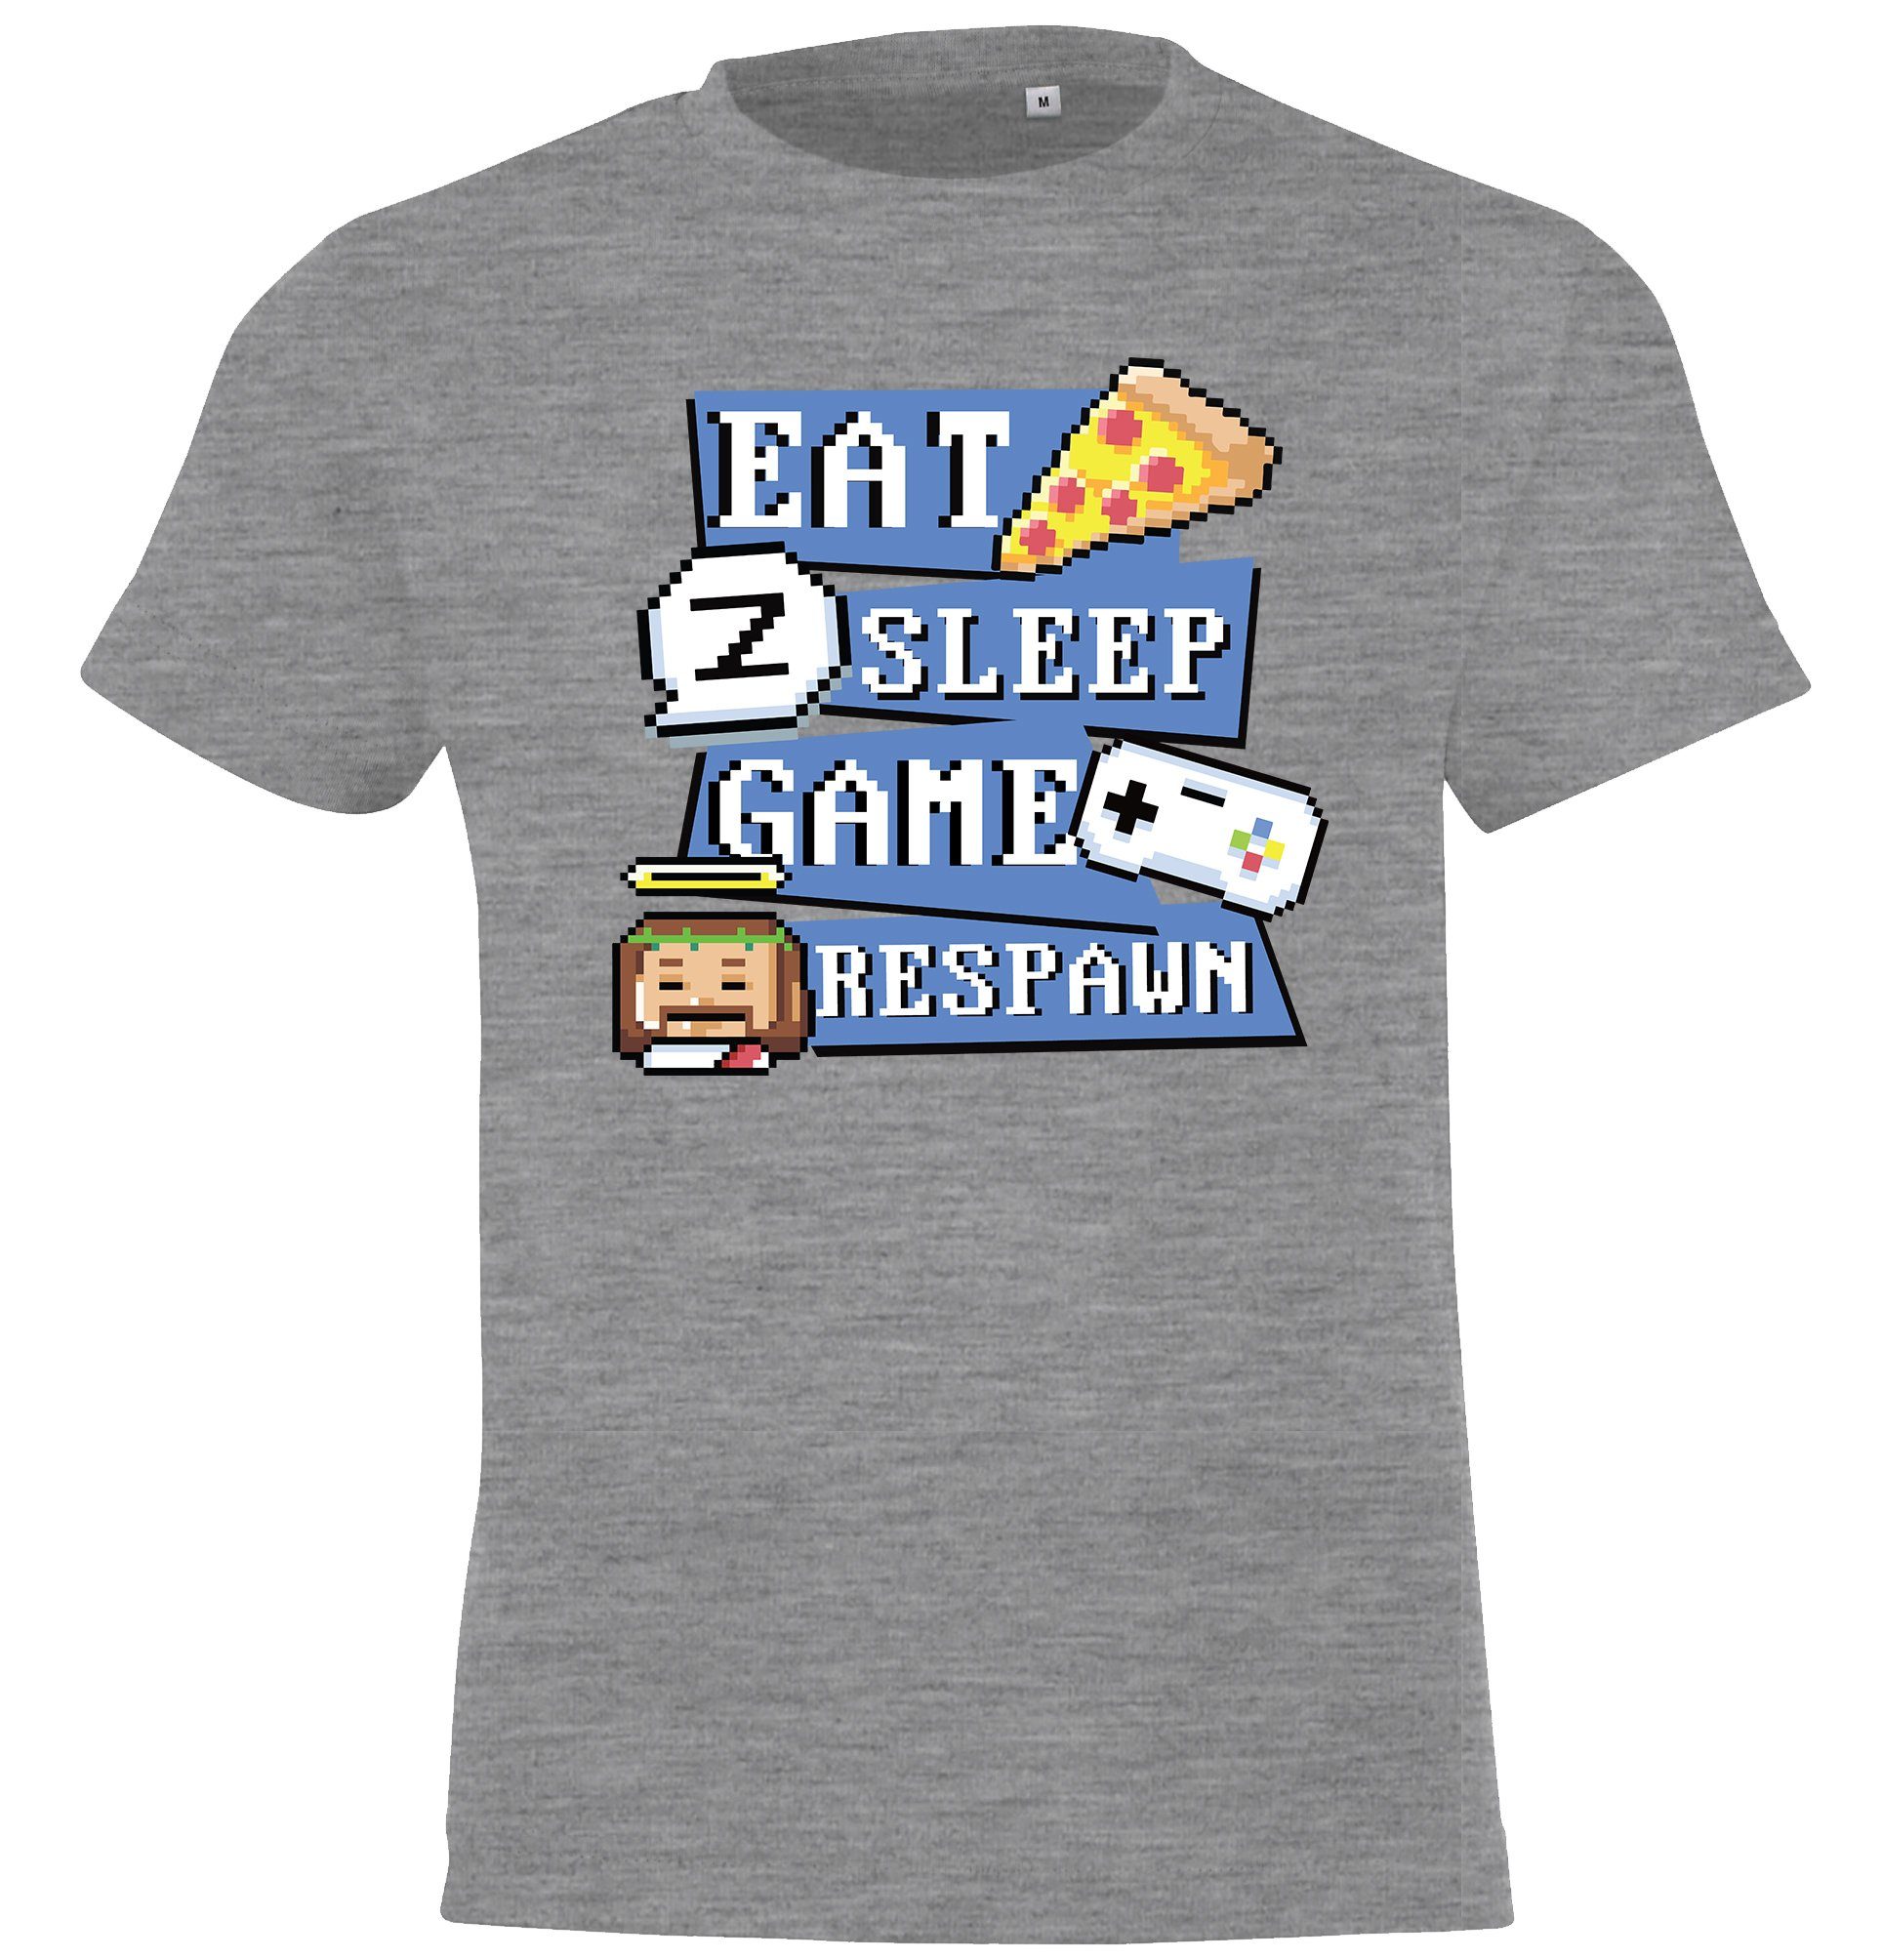 Youth Designz T-Shirt "Eat, Game, Sleep, Respawn" Kinder Shirt mit trendigem Frontprint Grau